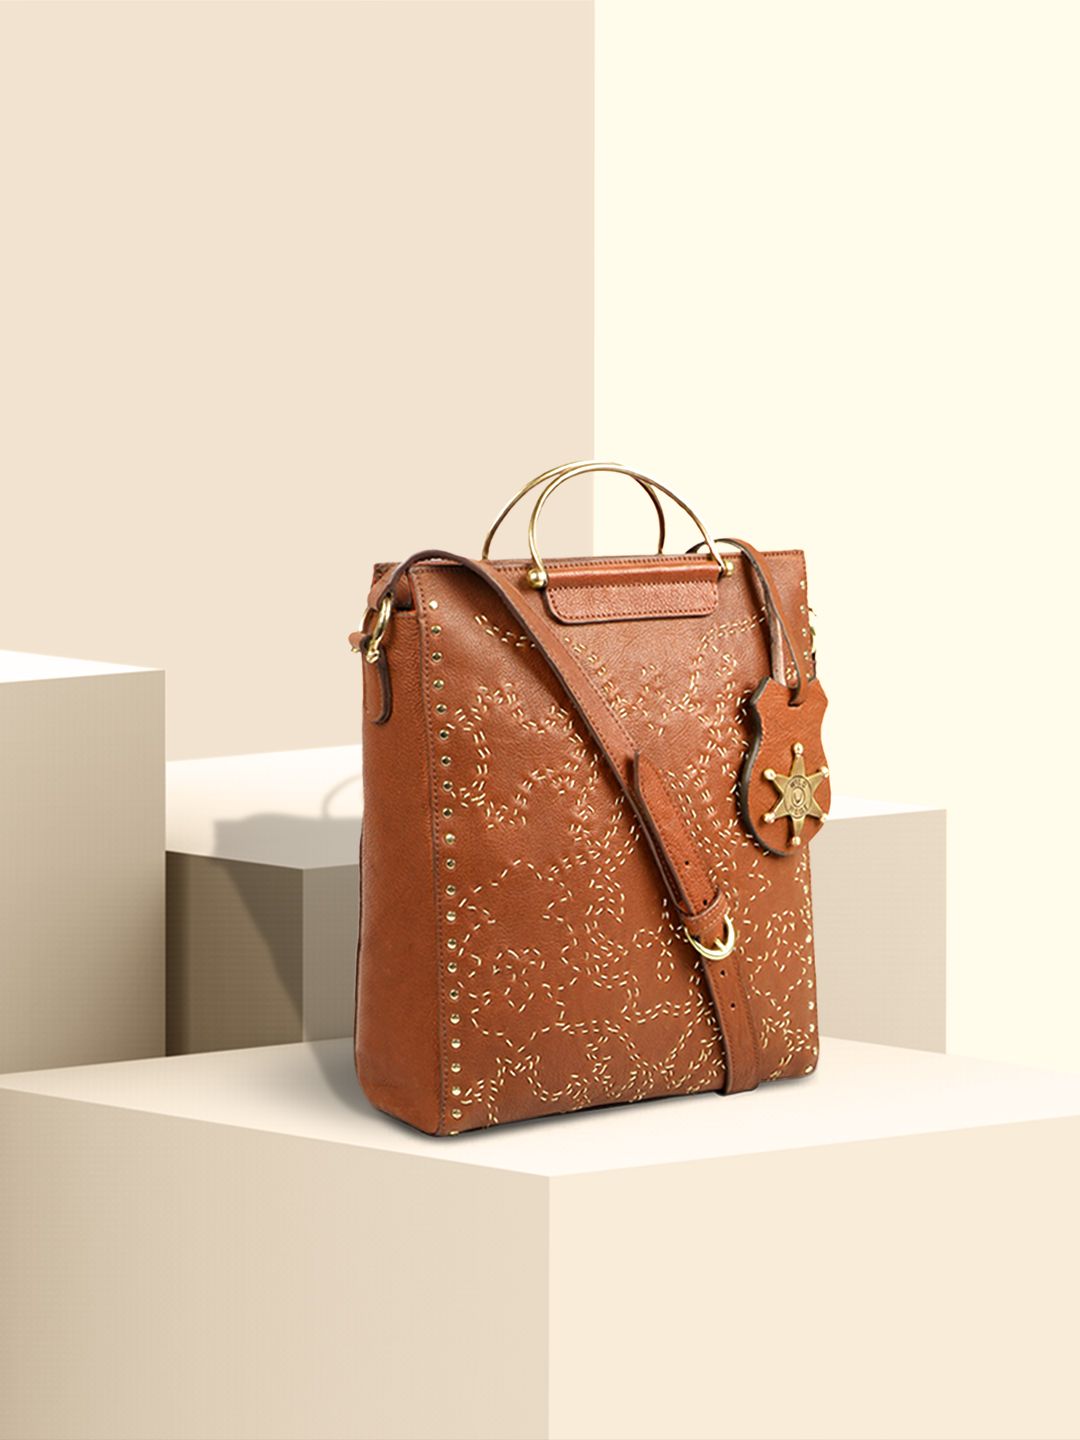 Hidesign Tan Brown Self Design Leather Sling Bag Price in India